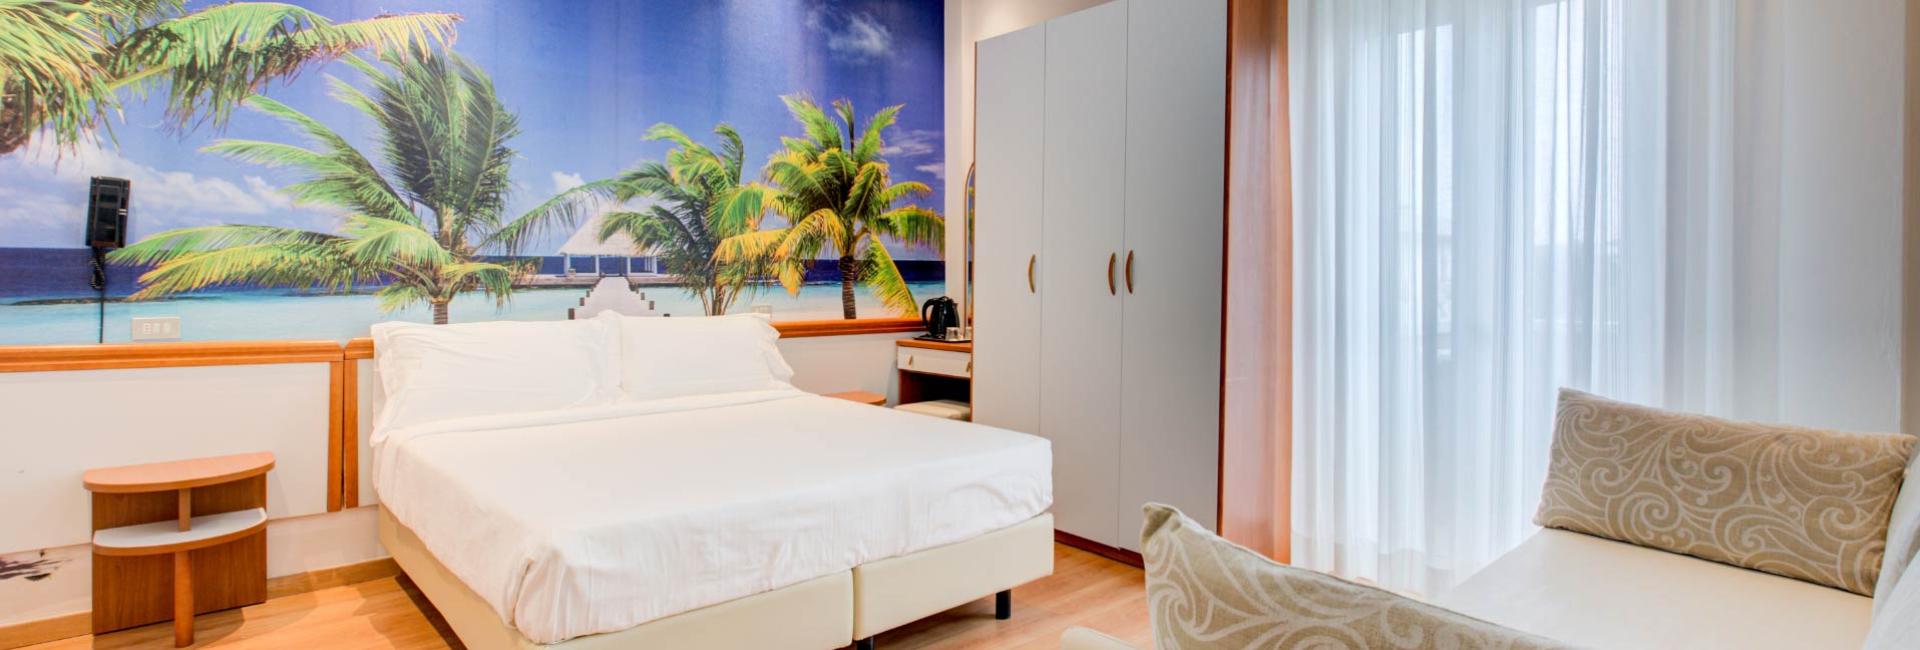 hotelsympathy en comfort-plus-rooms 004